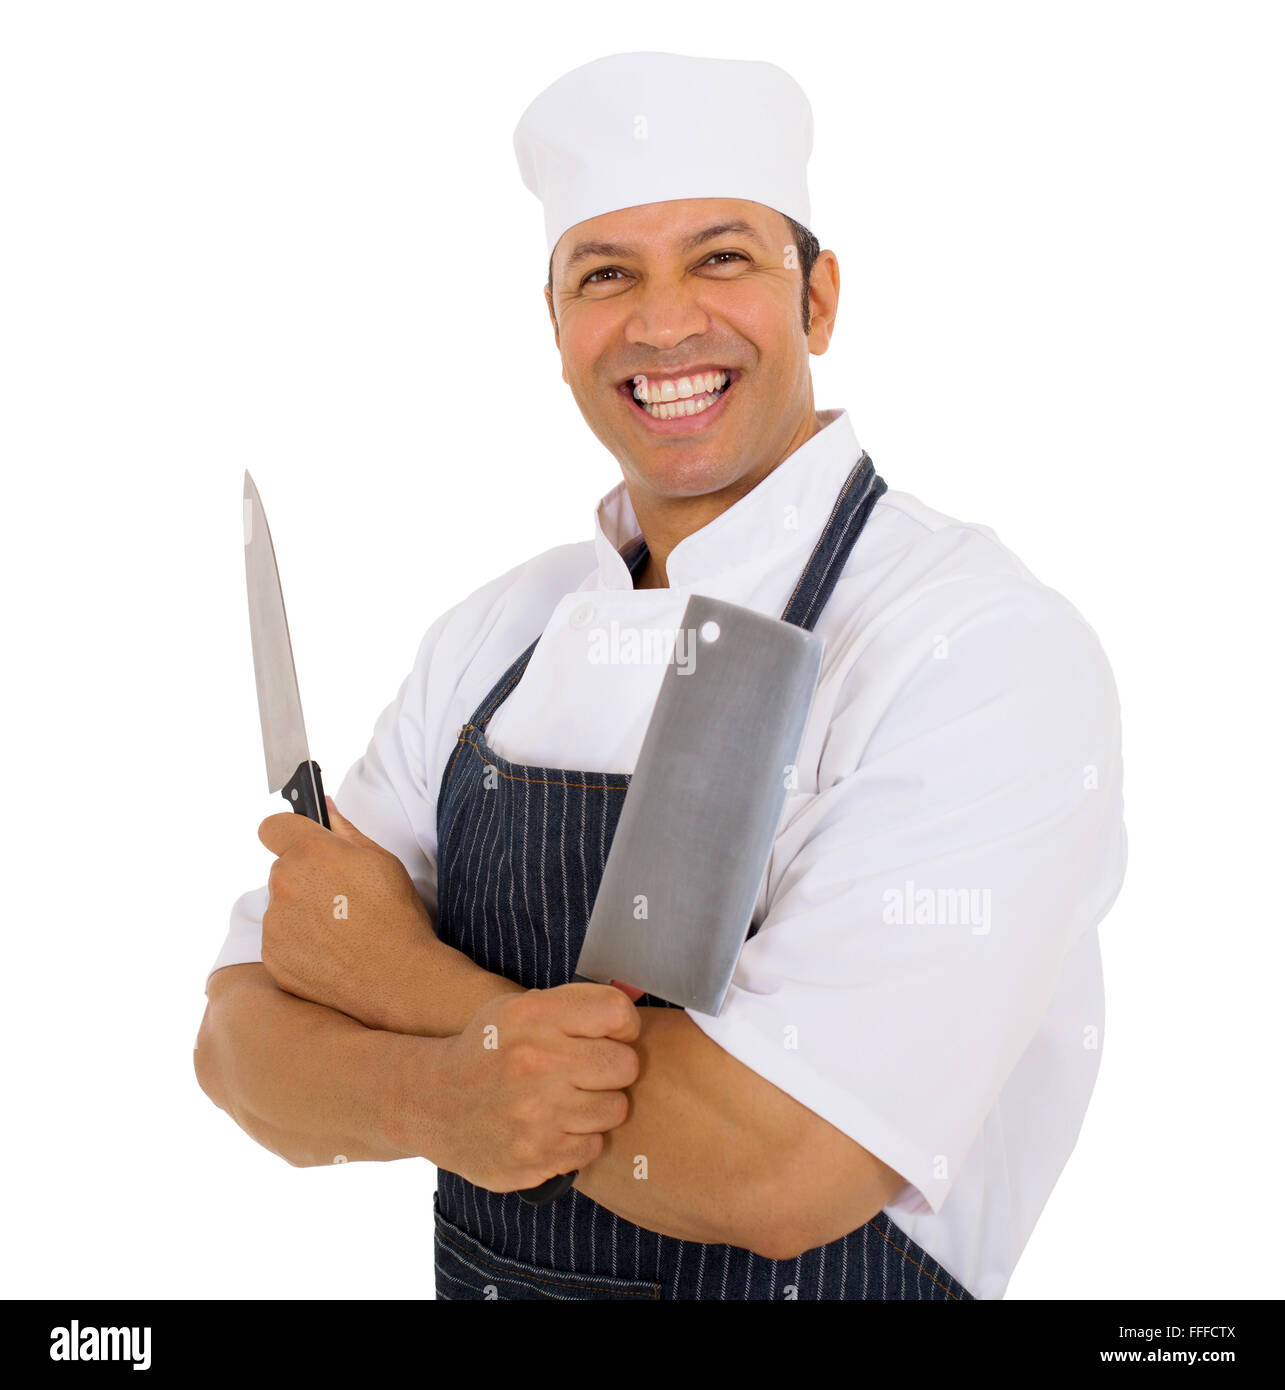 portrait of happy butcher holding knives Stock Photo